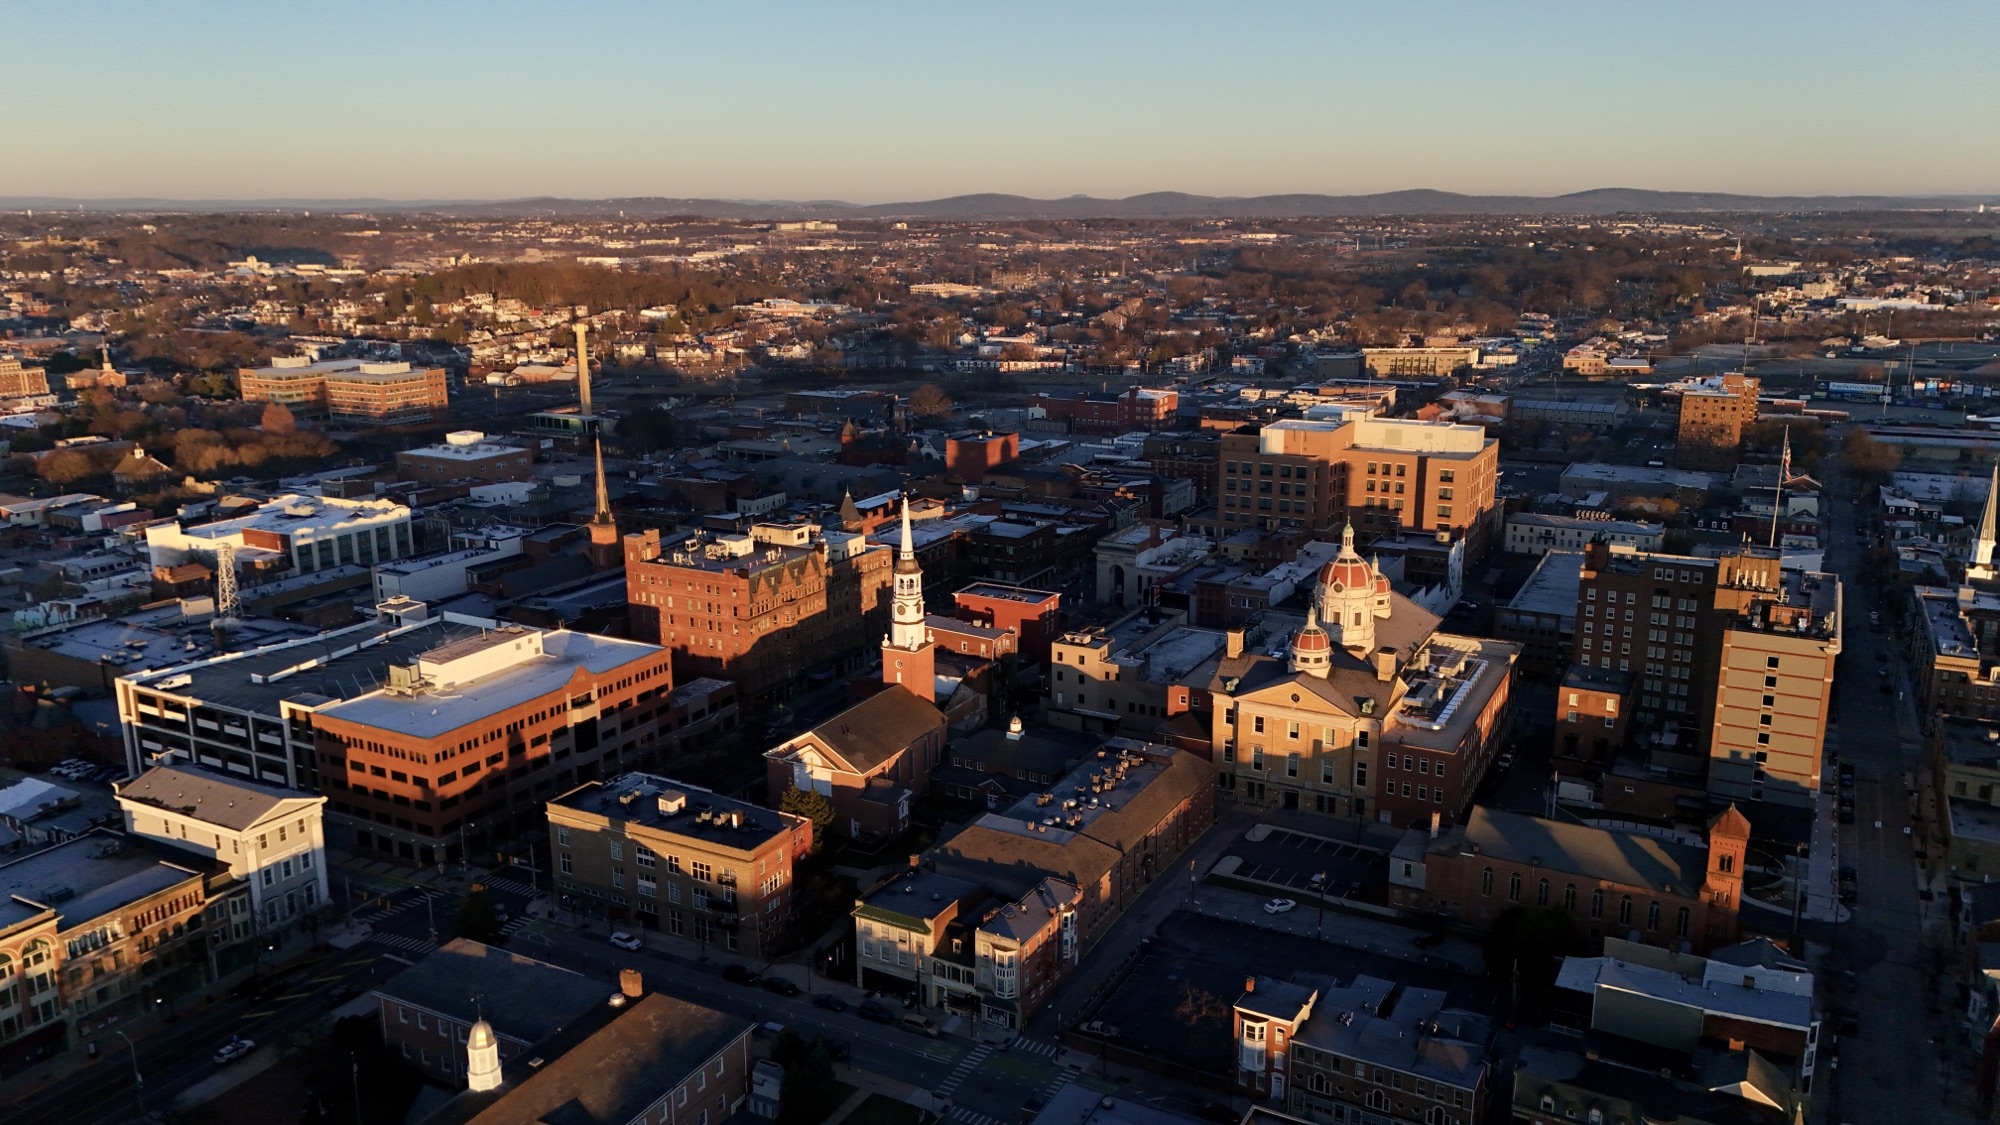 Bird's eye view of Downtown York Pennsylvania